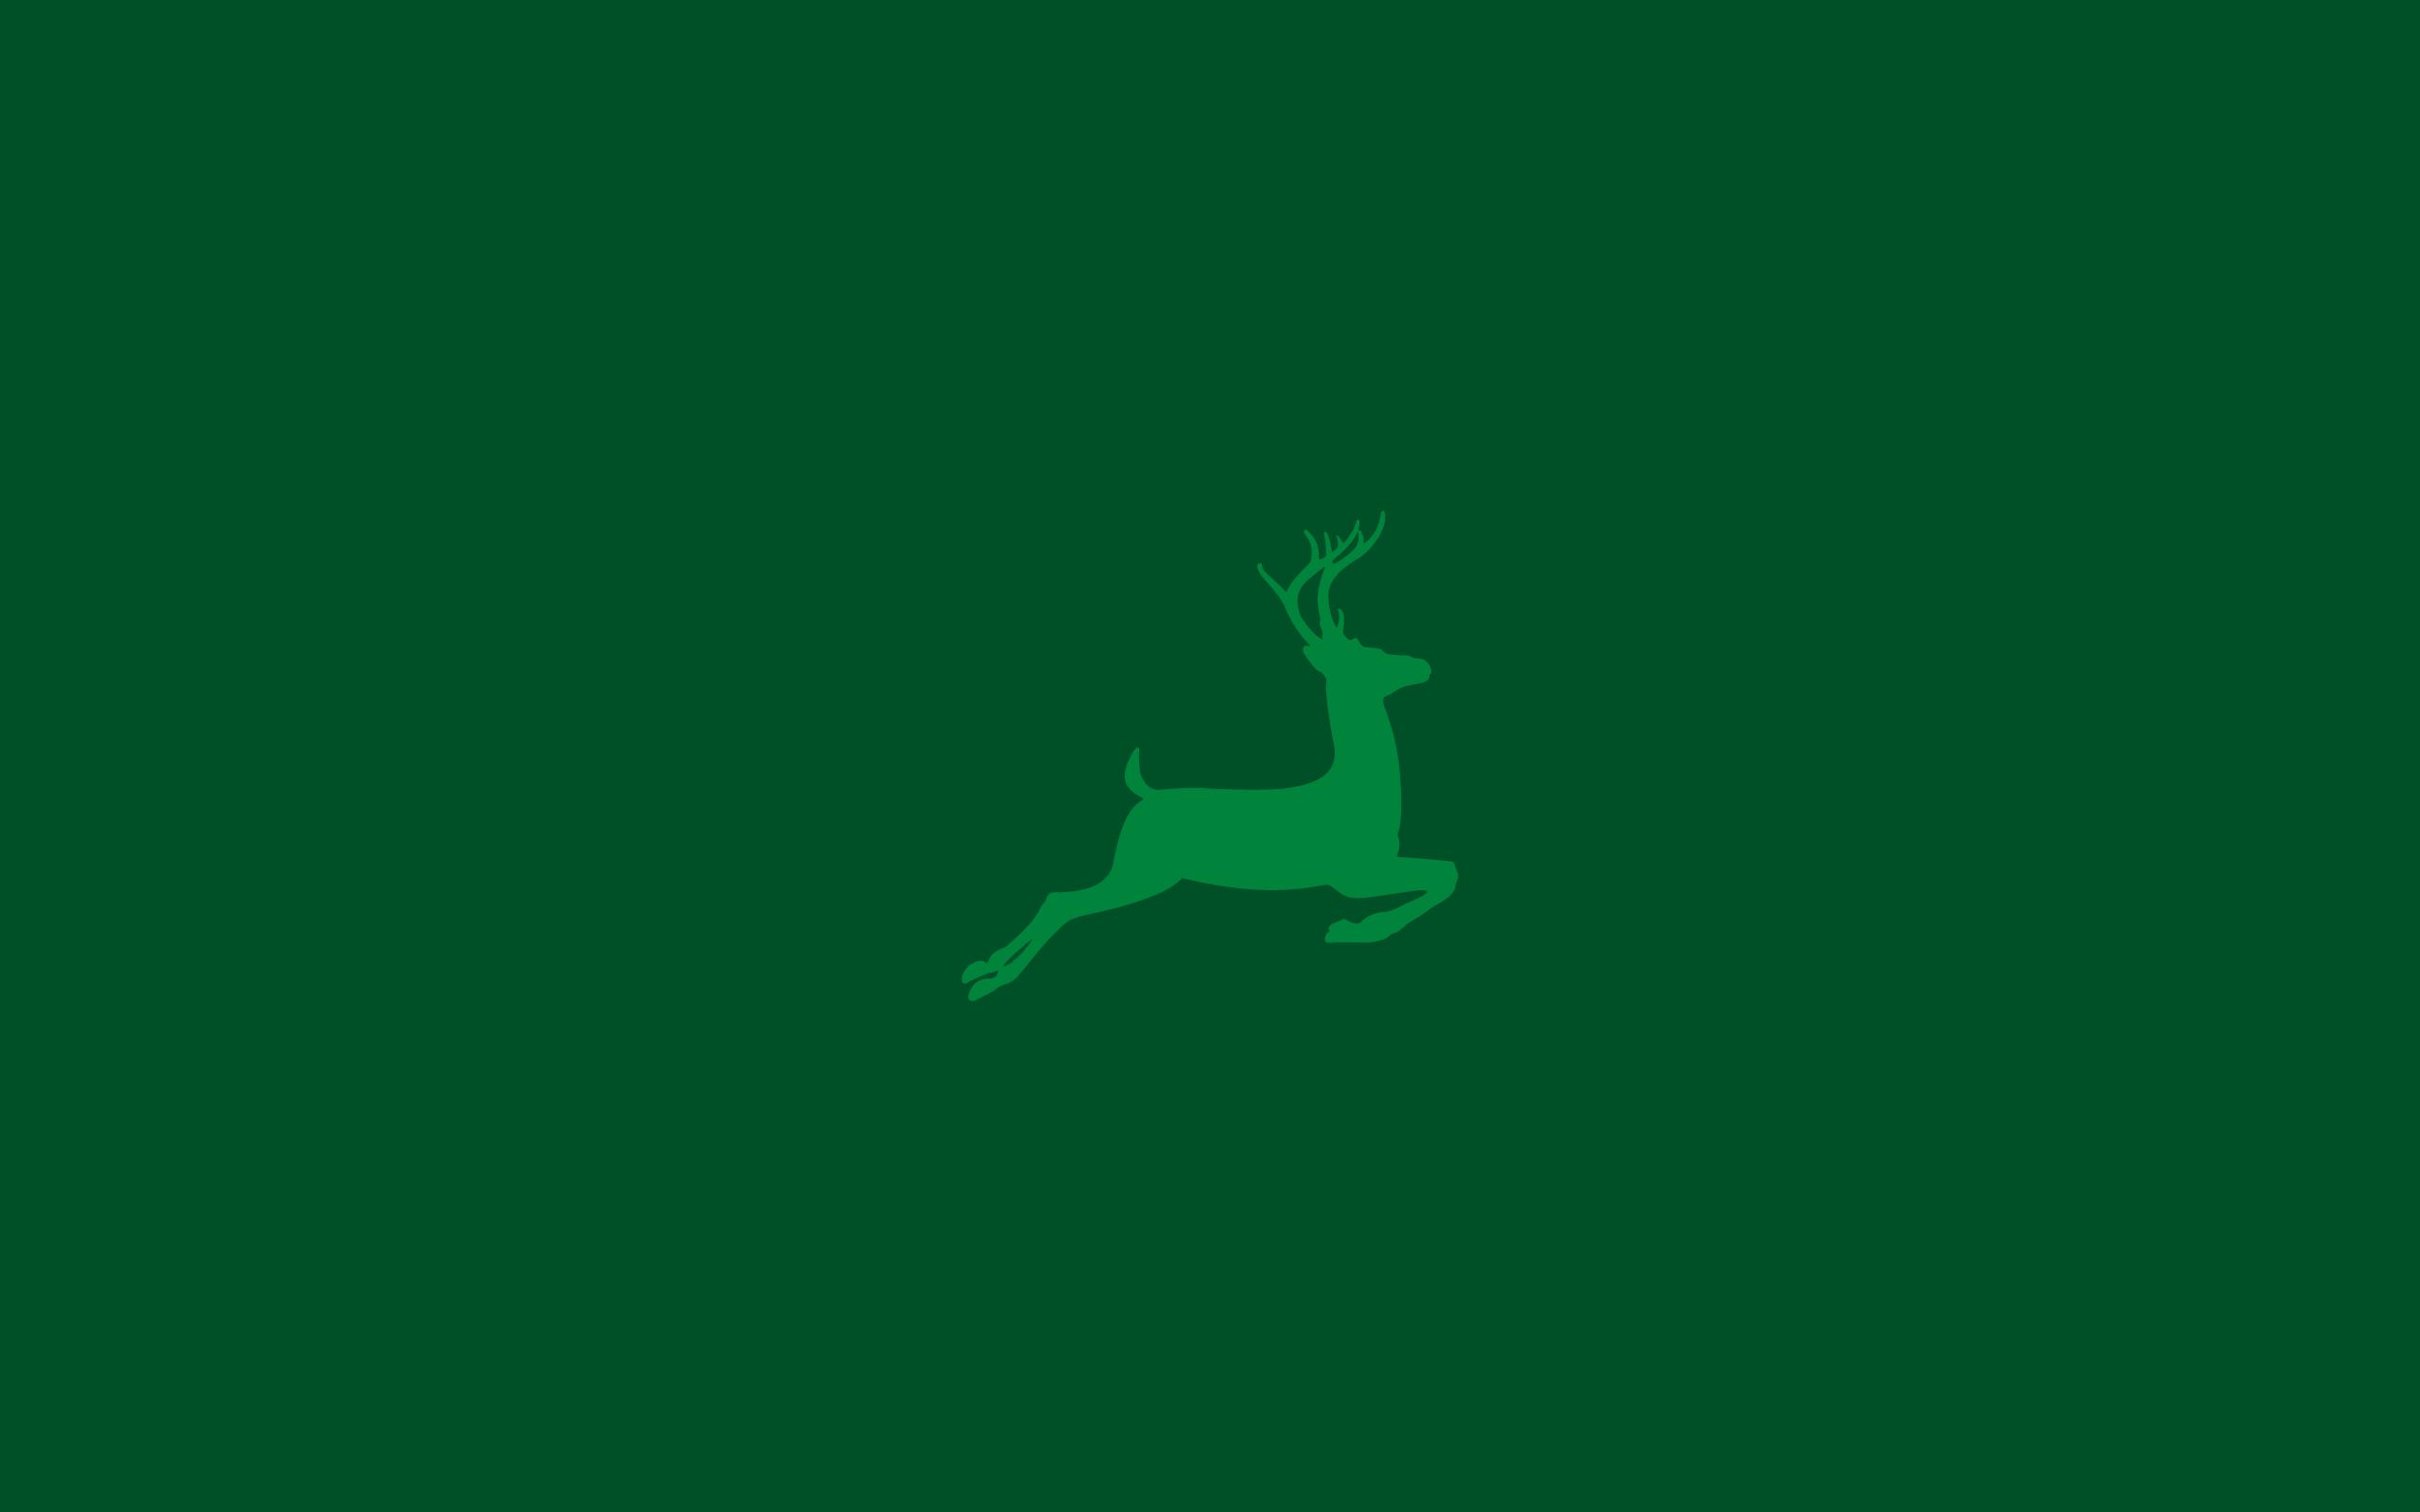 Christmas Deer Green Background Wallpaper